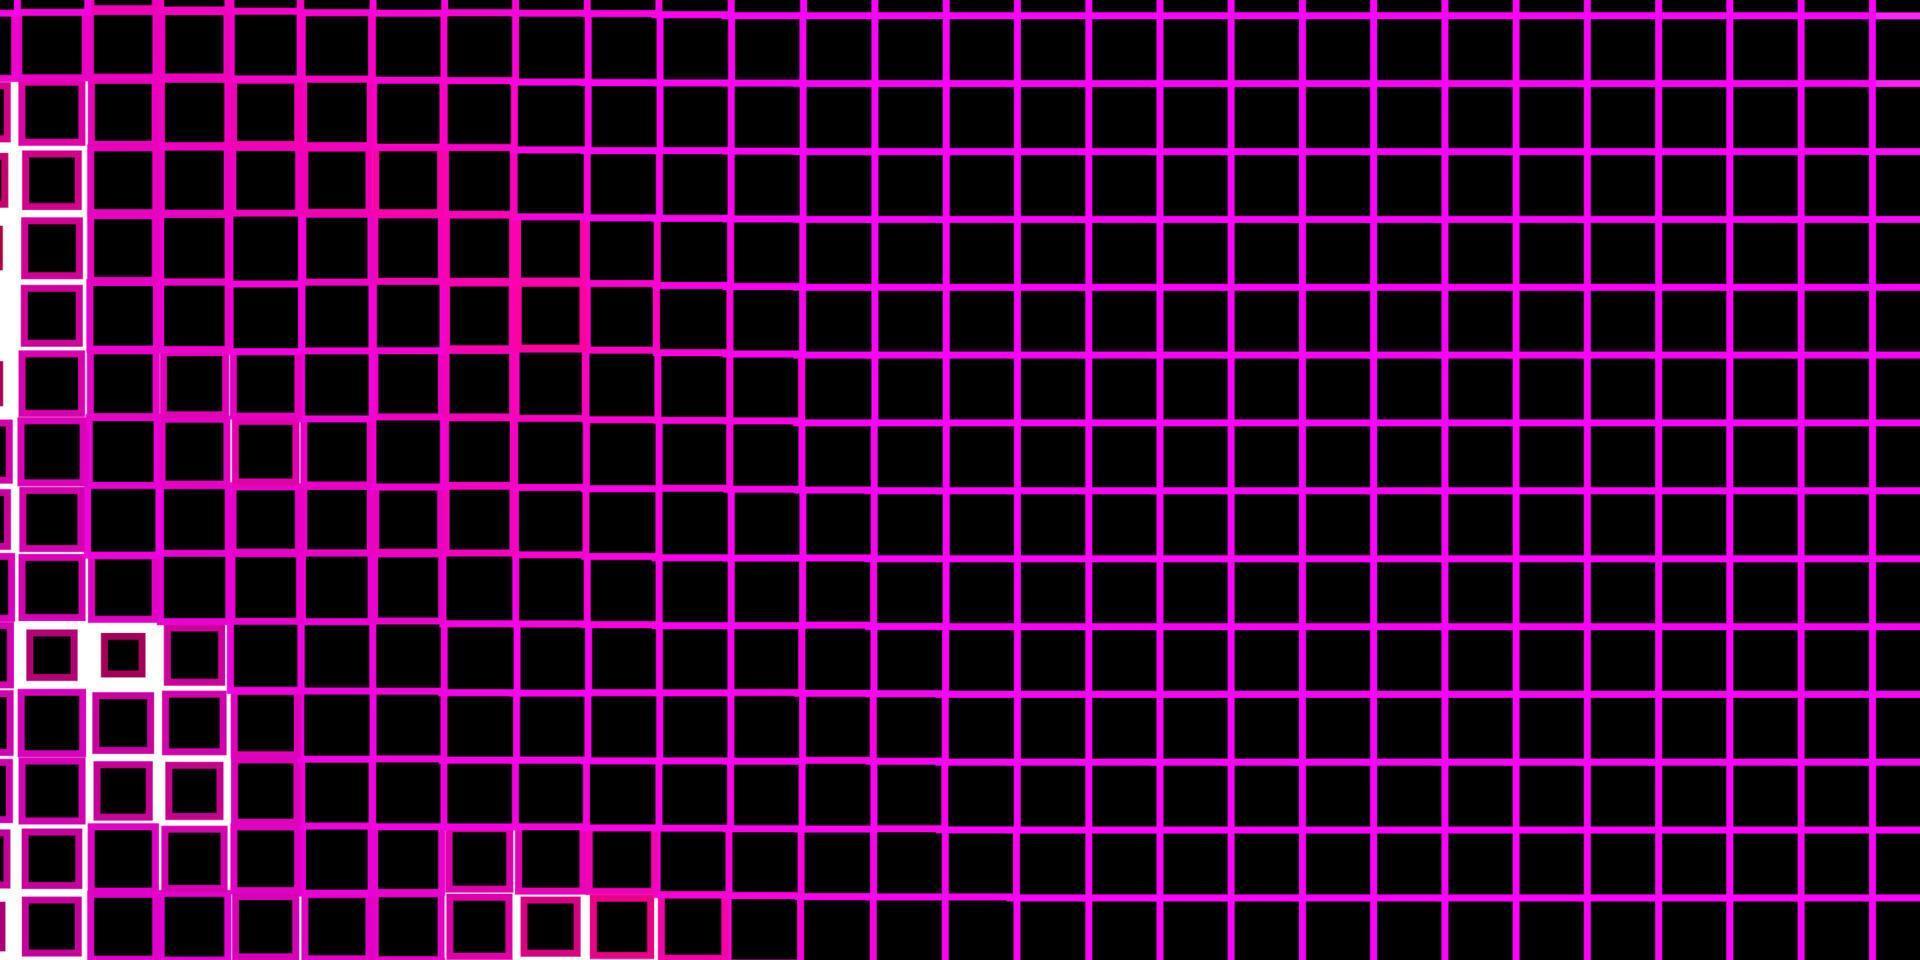 fundo vector rosa claro em estilo poligonal.